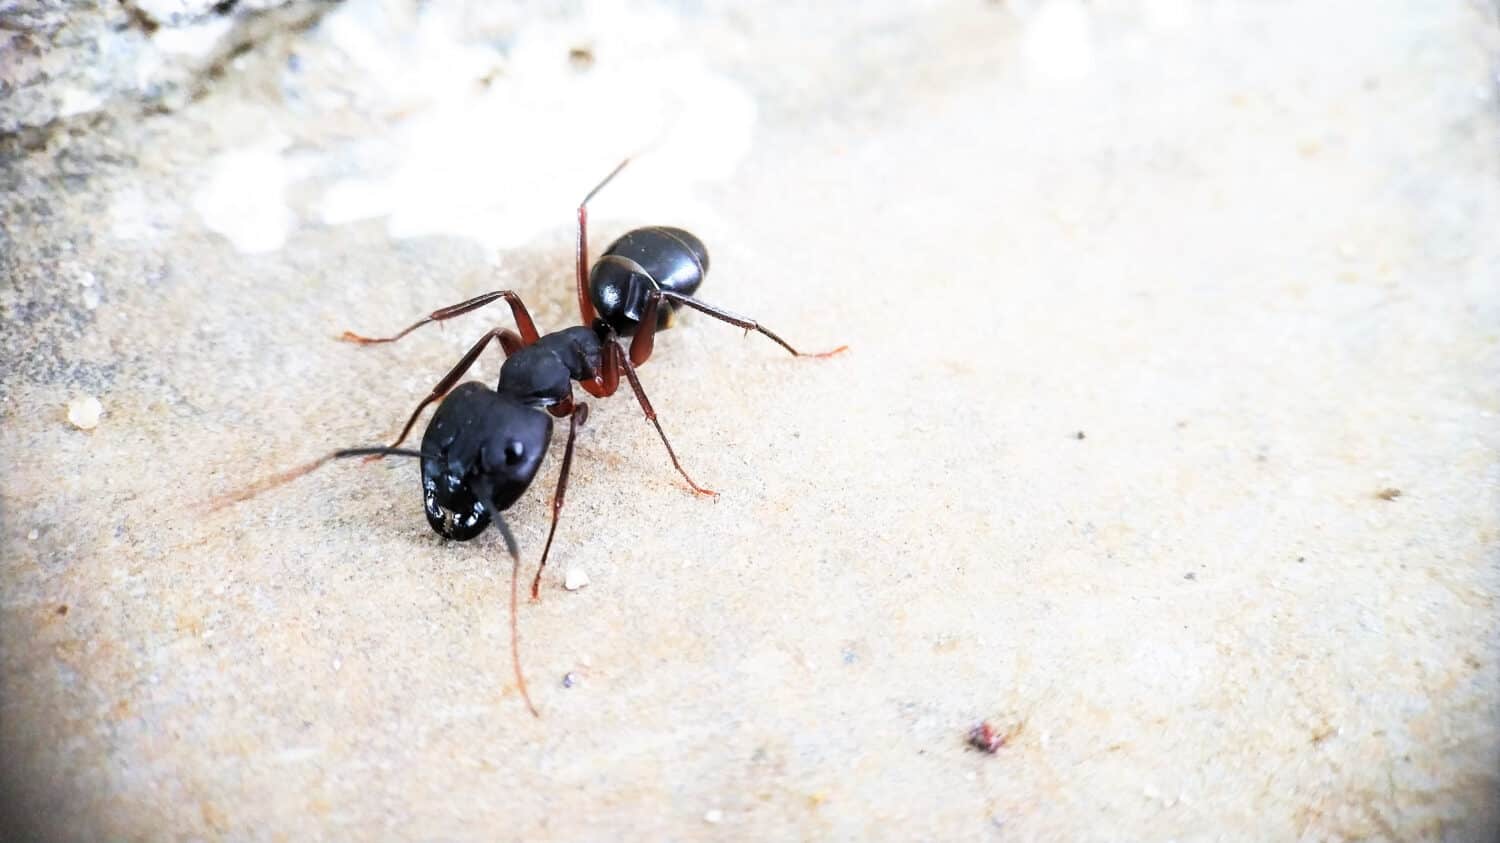 Black carpenter ants are a common ant in North America